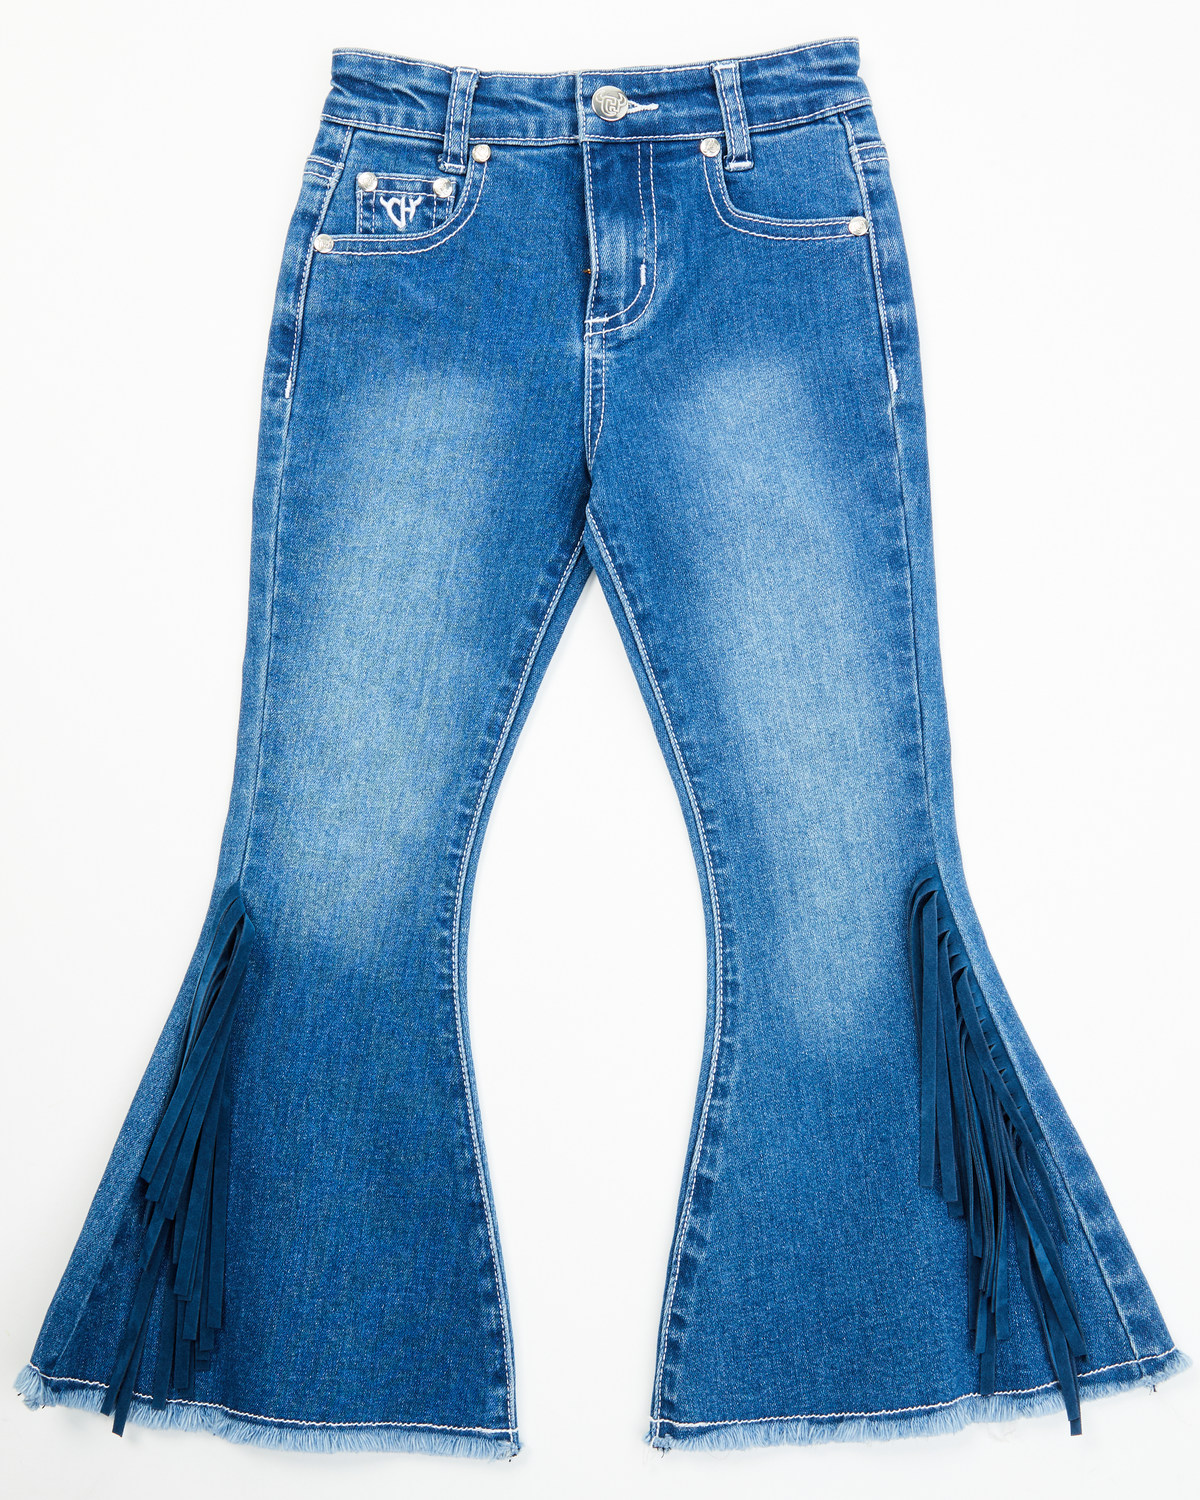 Cowgirl Hardware Toddler Girls' Fringe Bell Bottom Stretch Denim Jeans